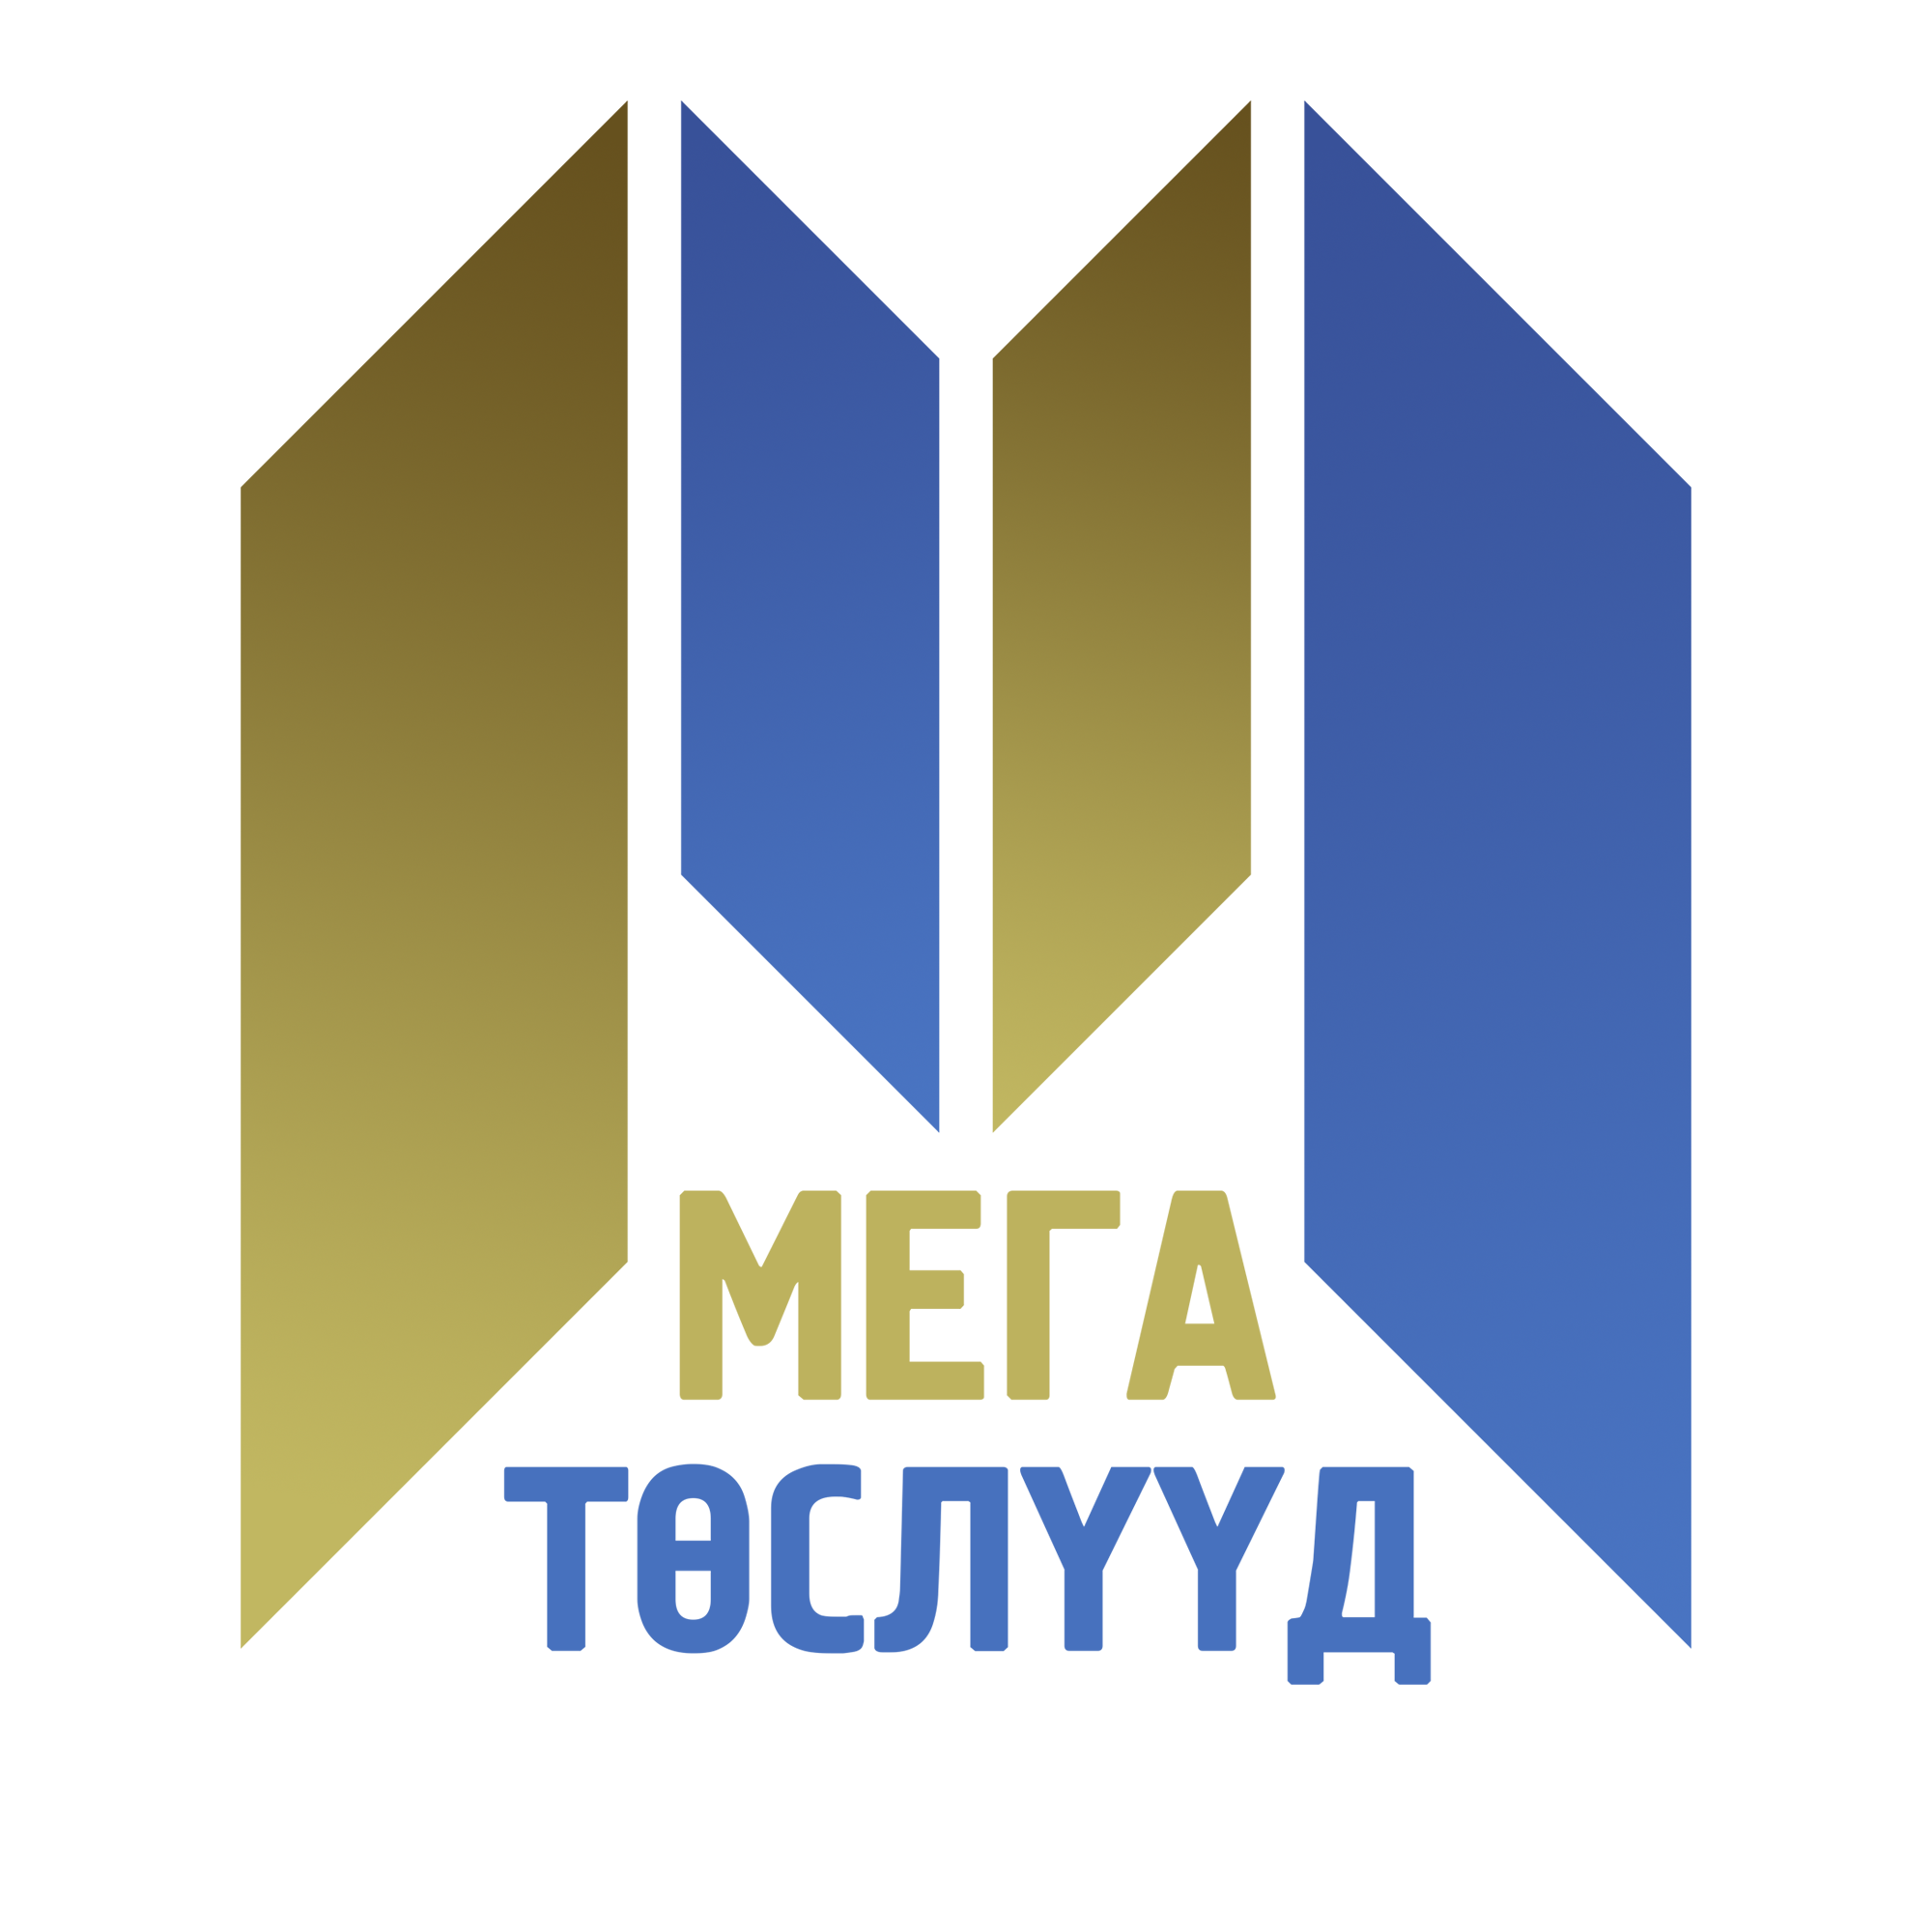 MT logo